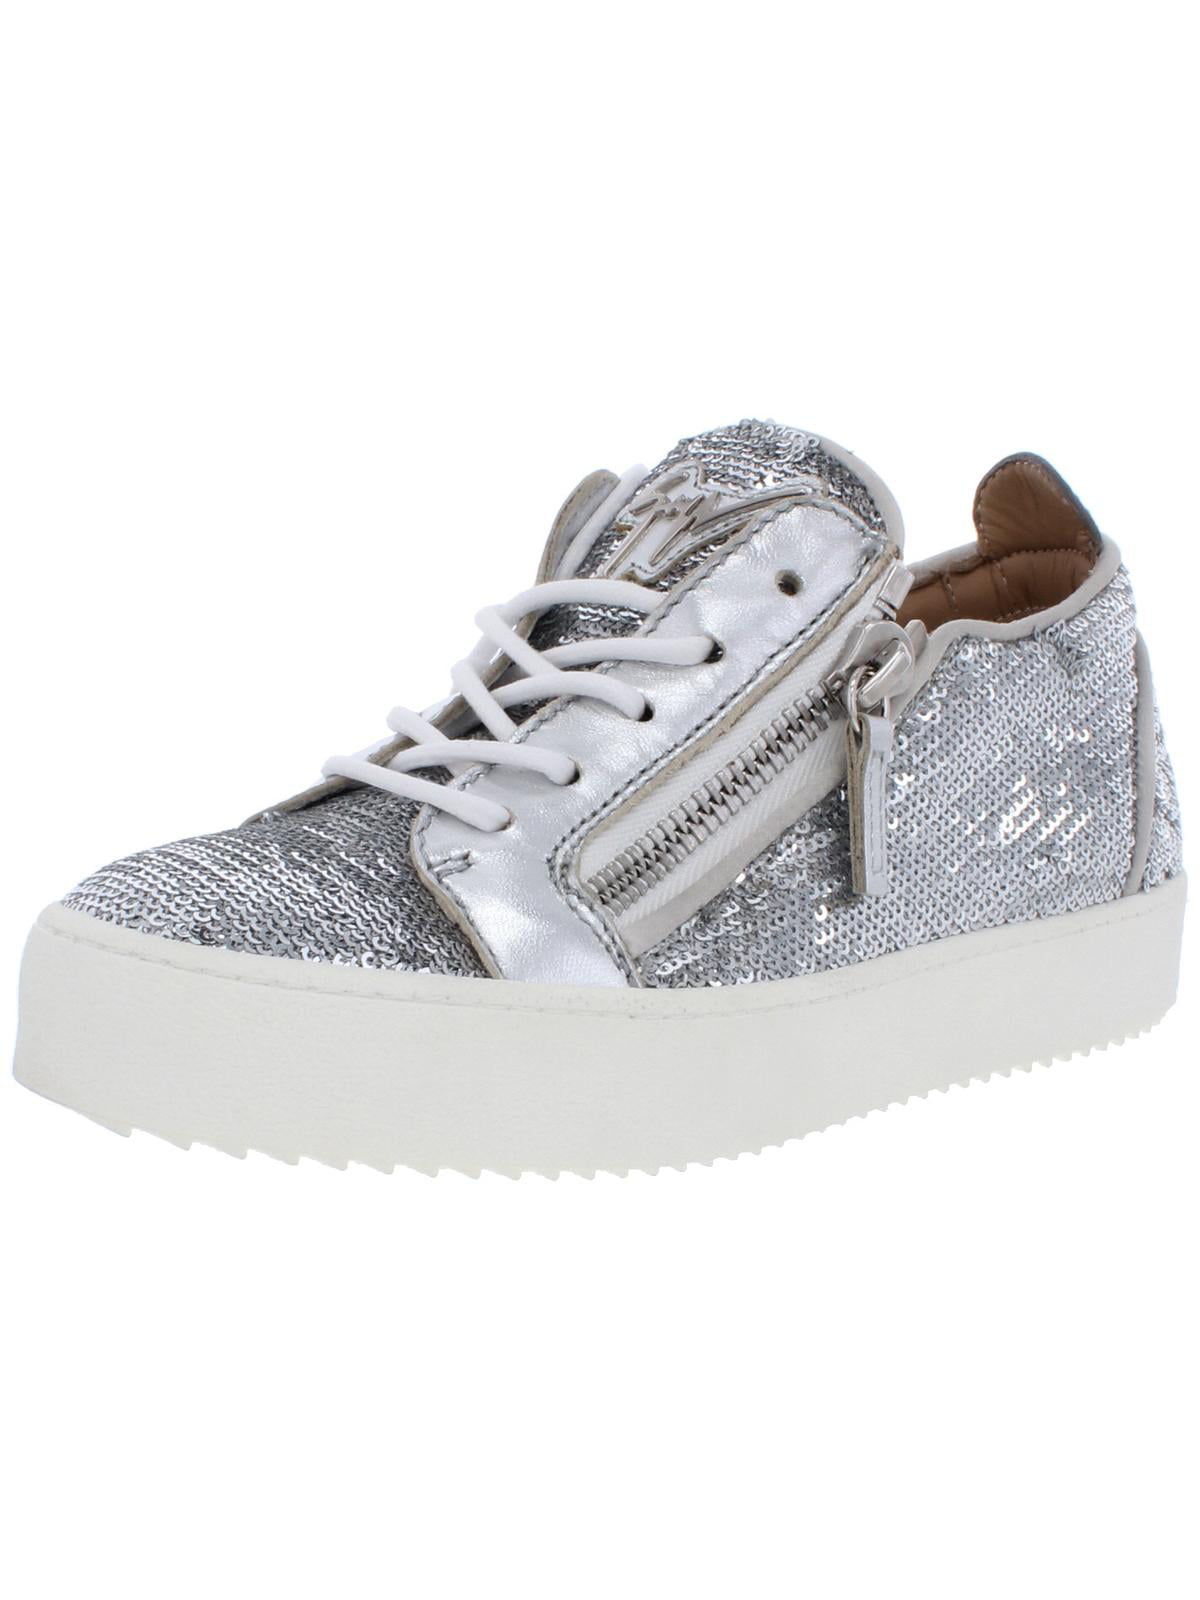 Giuseppe Womens May London SC Donna Lifestyle Fashion Sneakers Silver - Walmart.com